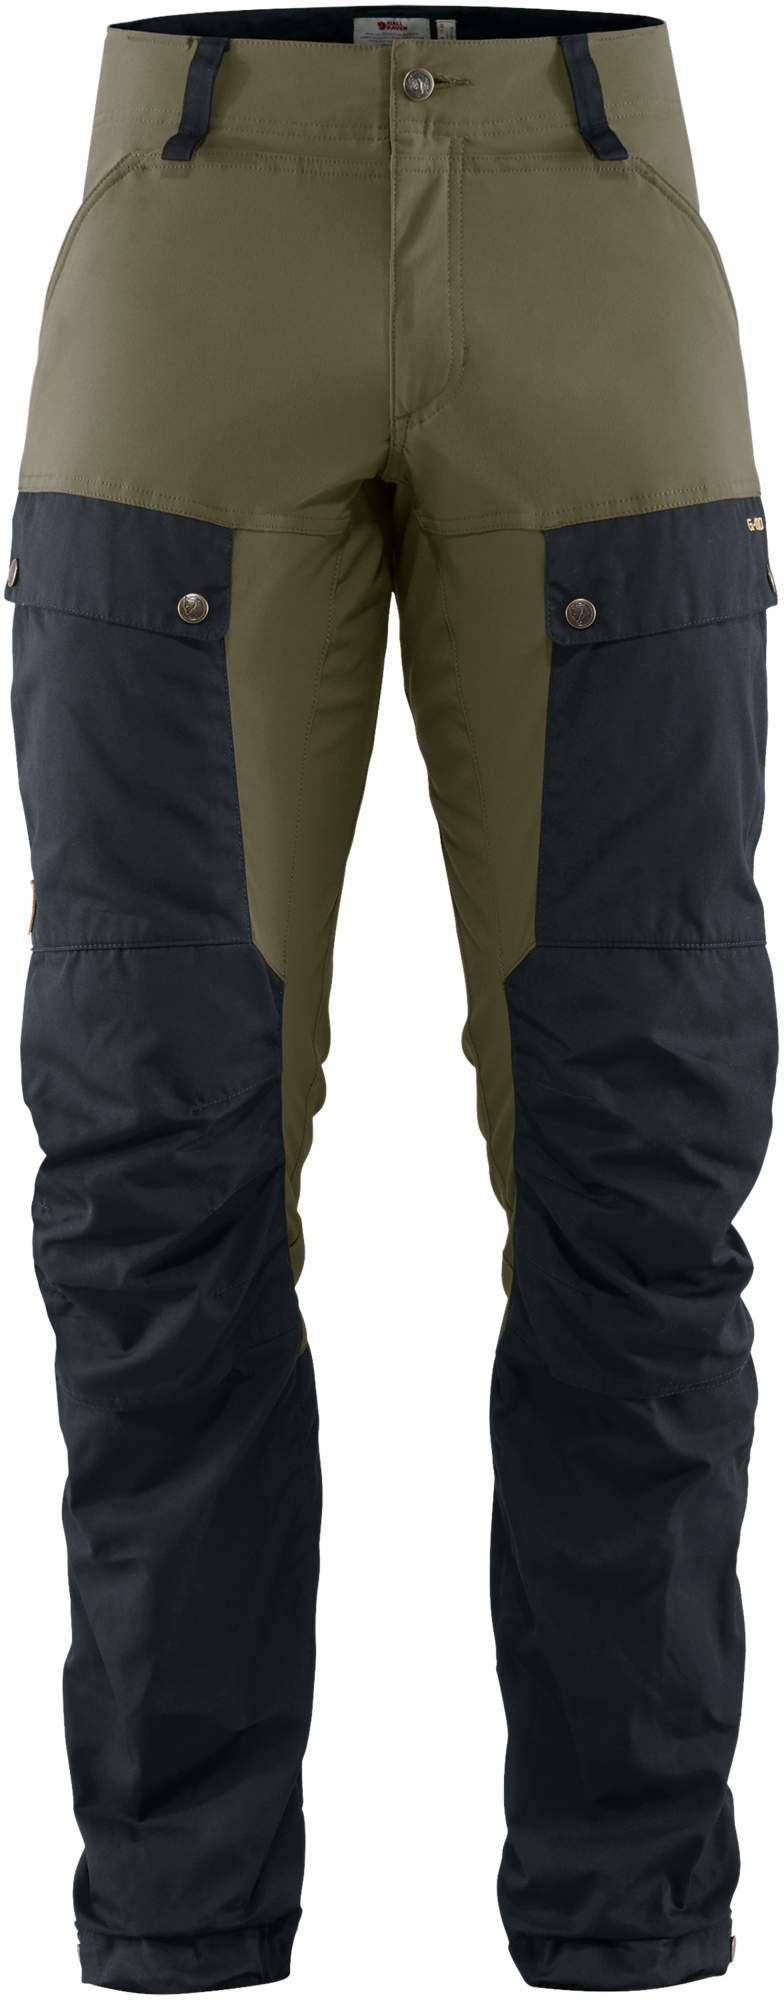 Keb Trousers Regular Navy/Olive 50